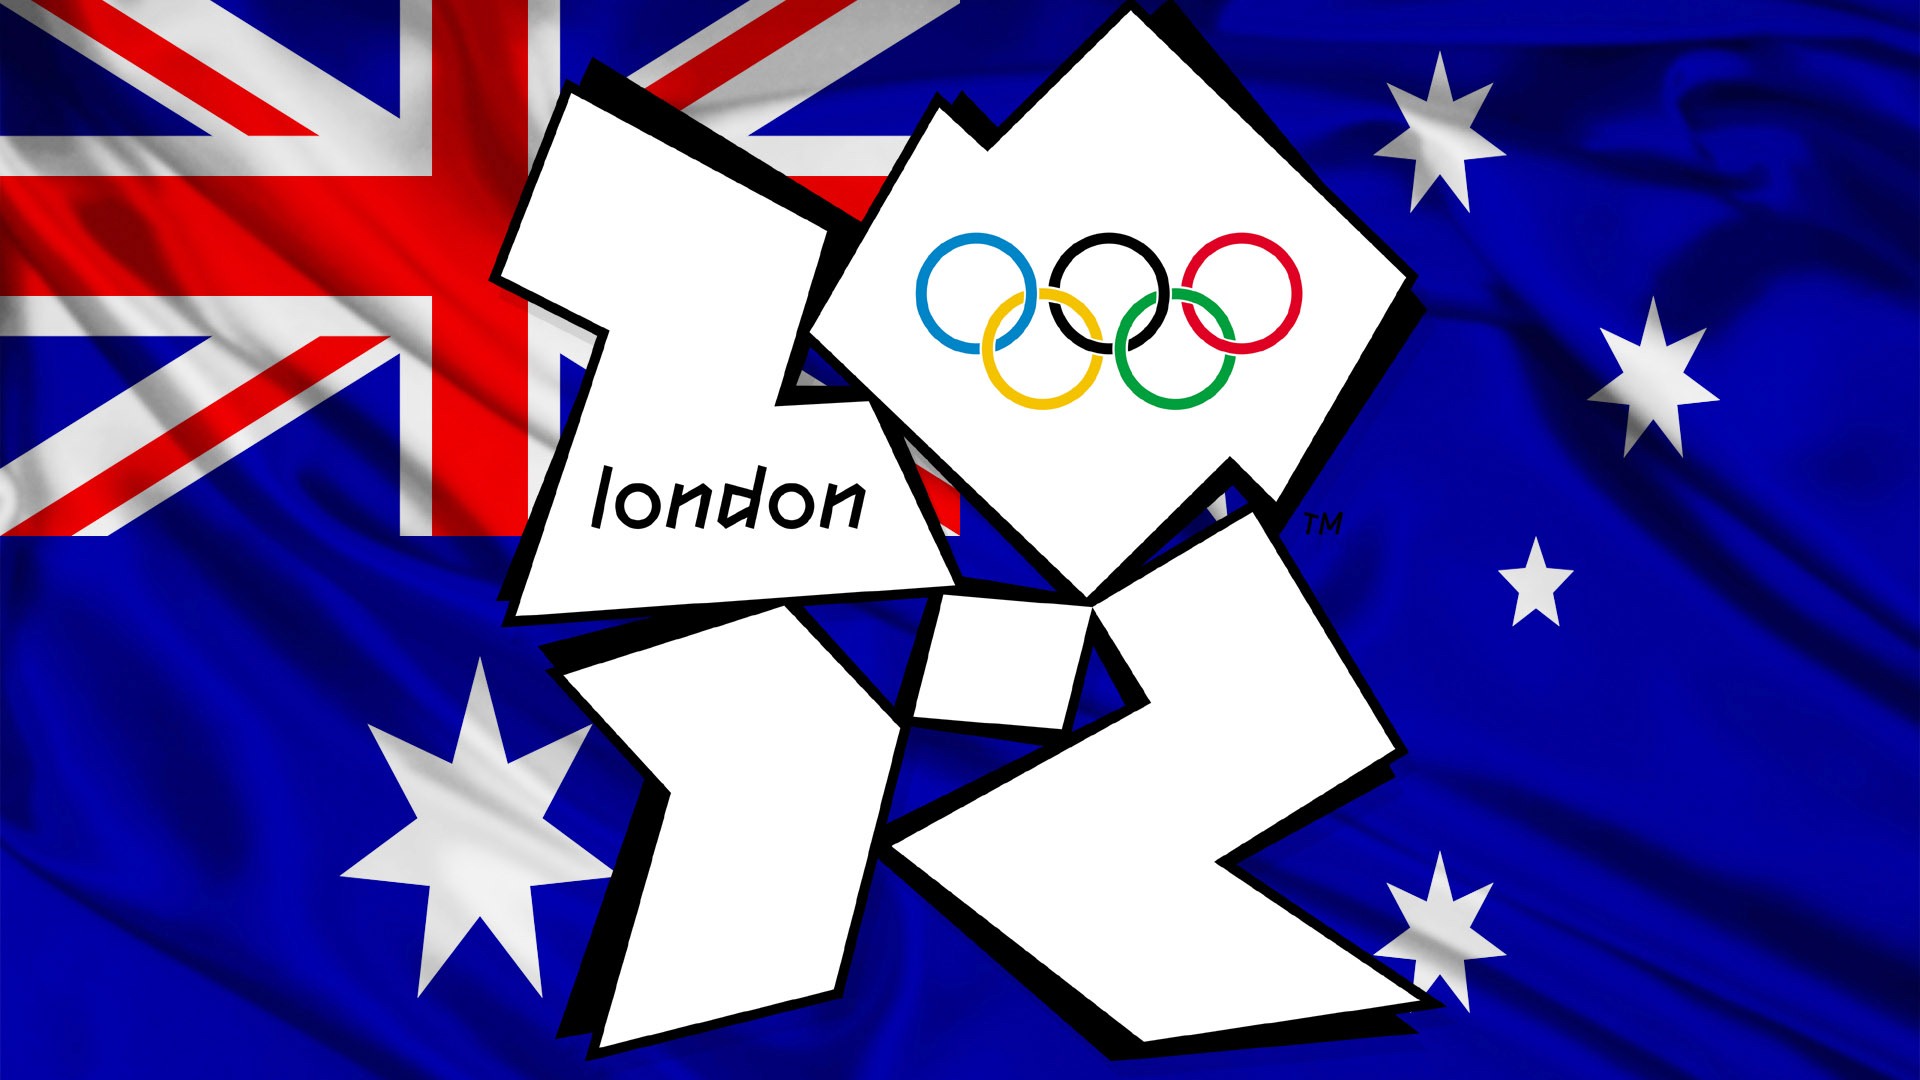 London 2012 Olympics theme wallpapers (1) #5 - 1920x1080